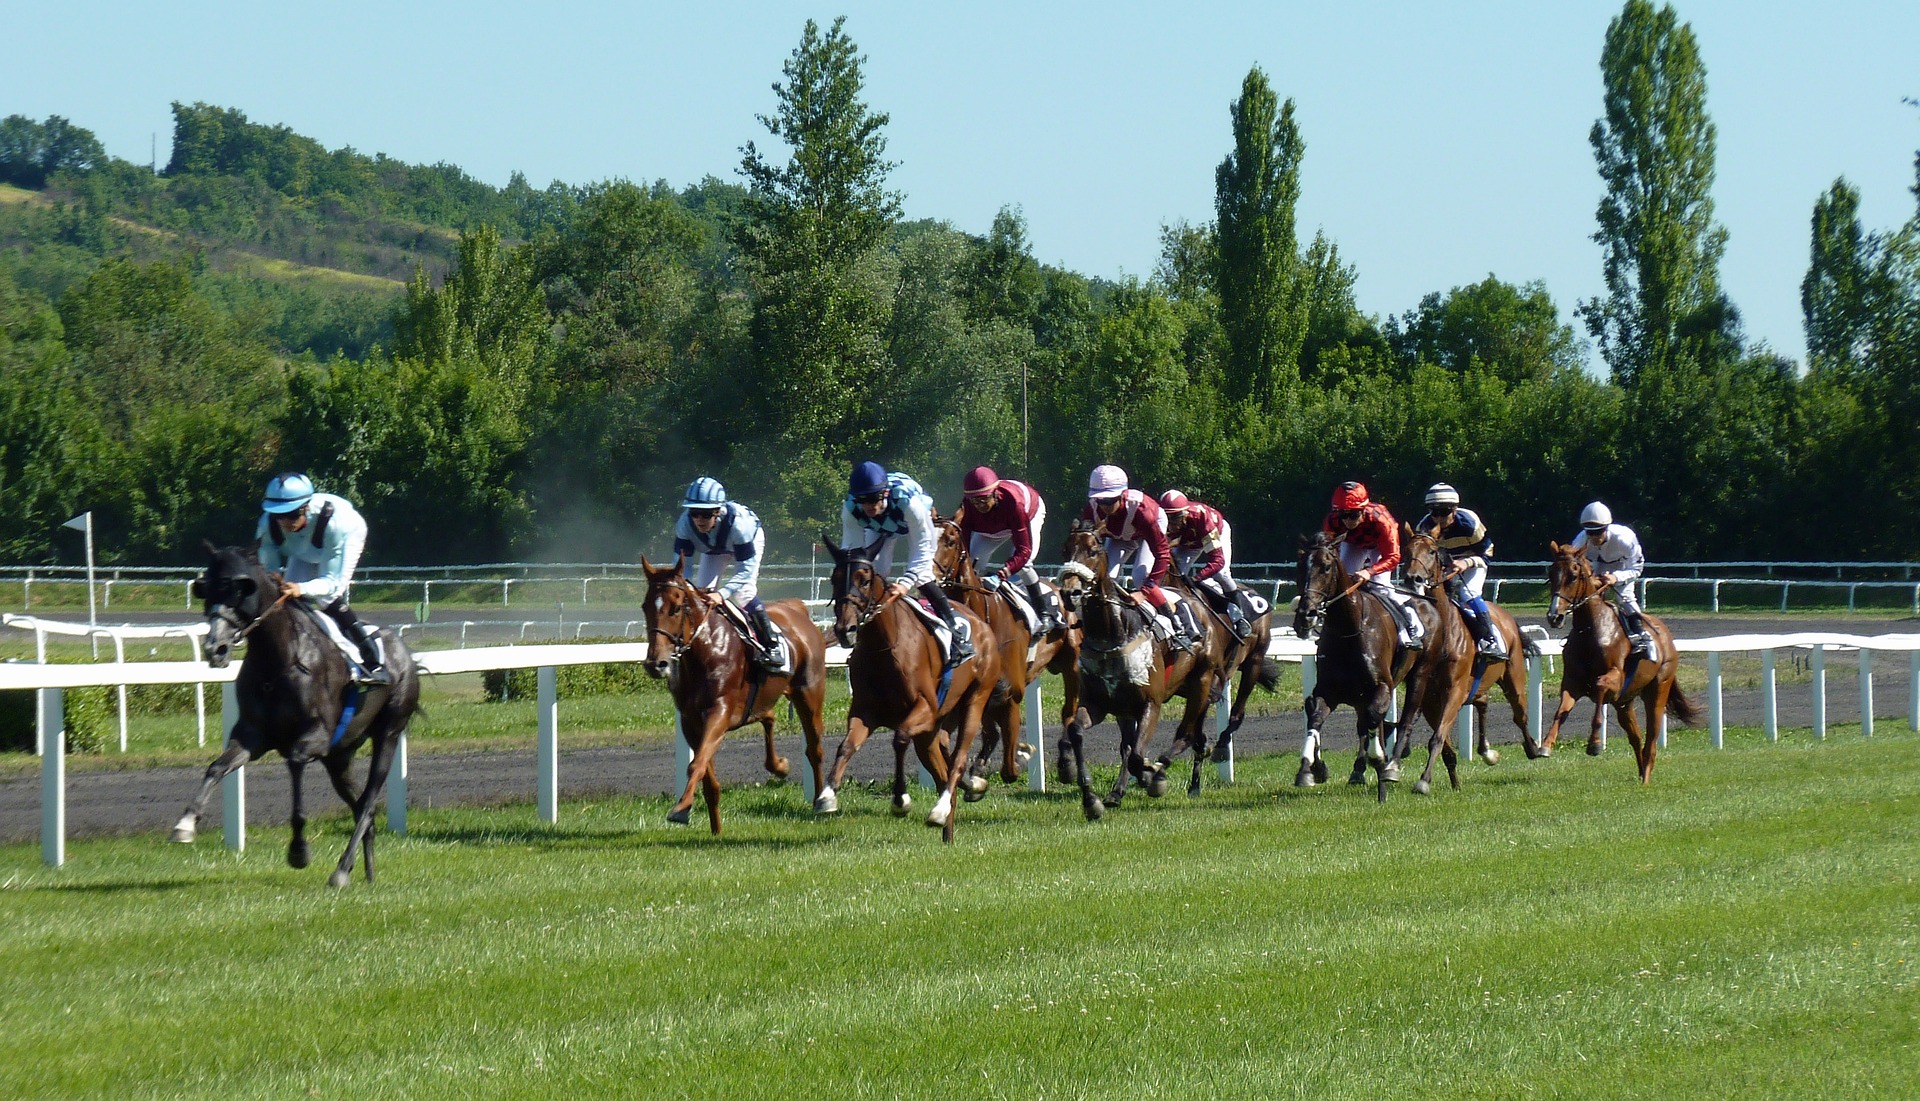 Horse race in Europe